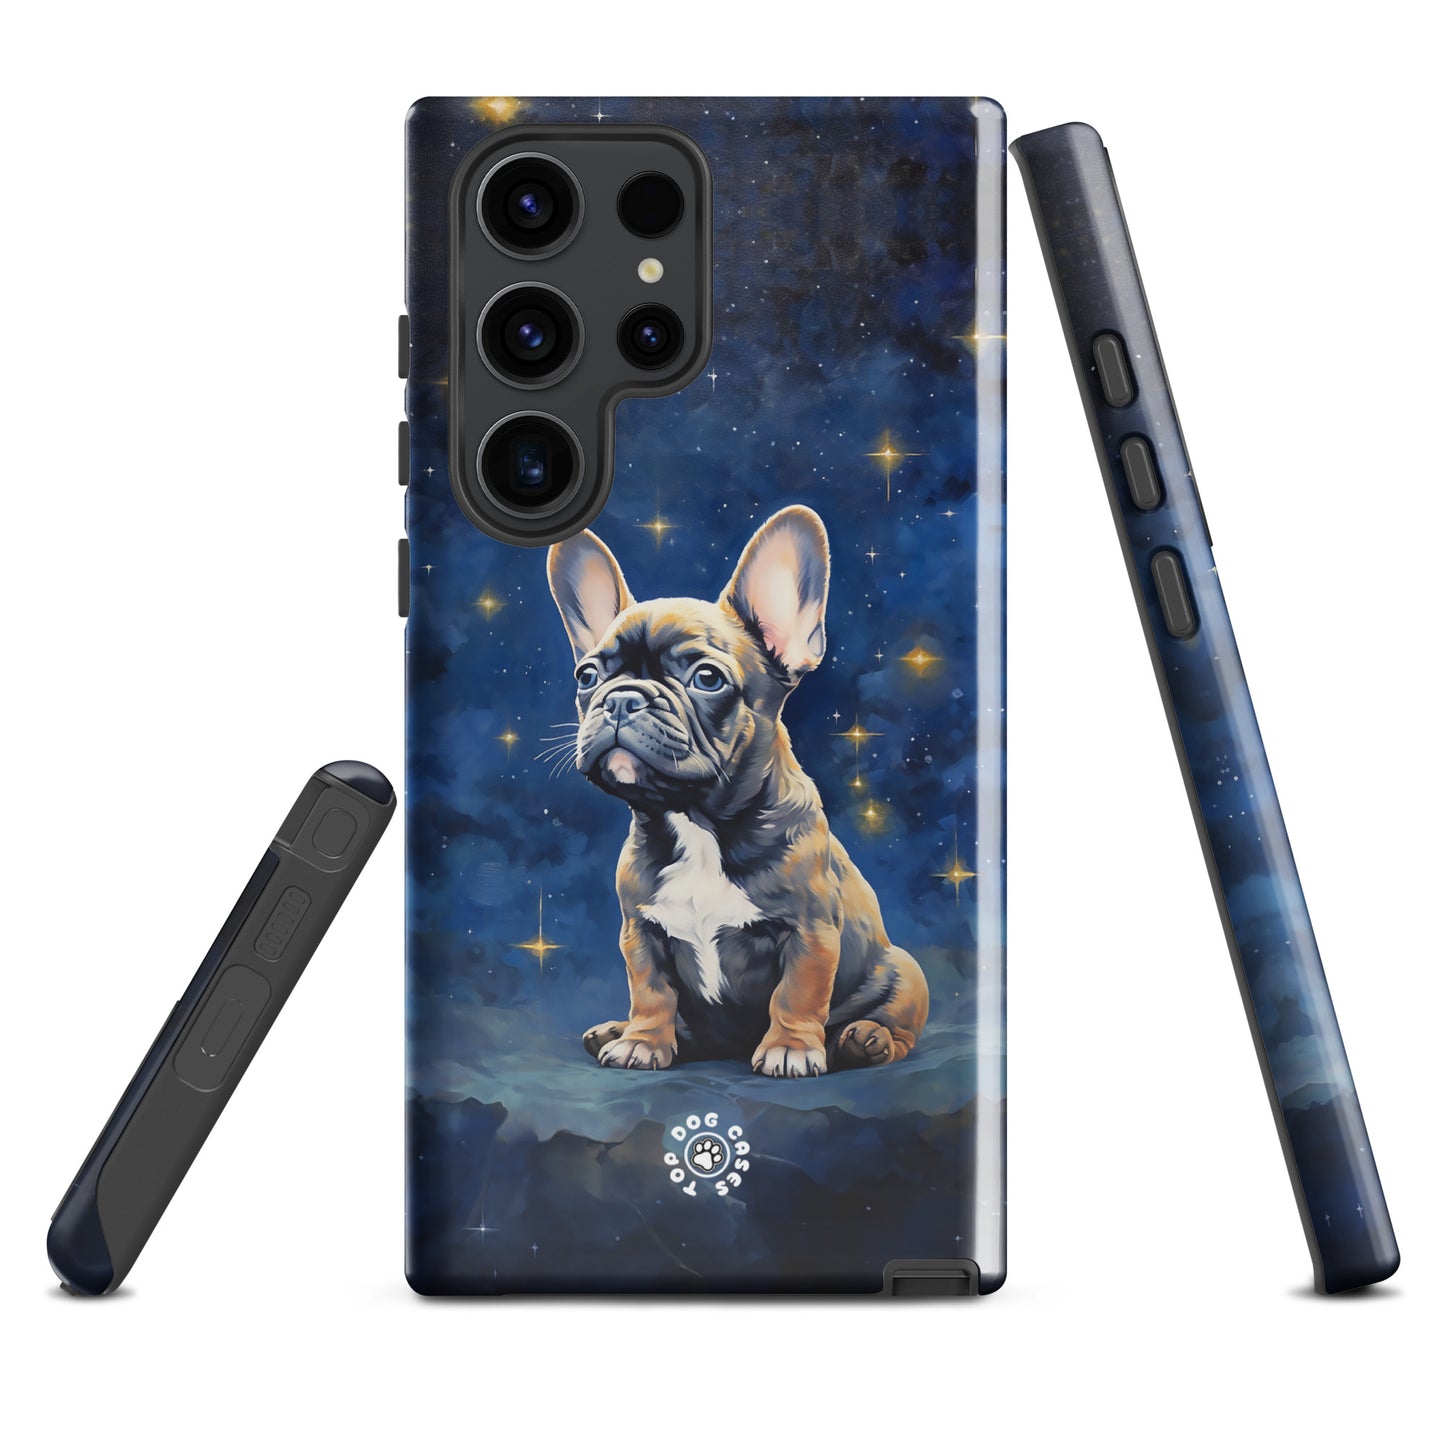 French Bulldog - Samsung Phone Case - Cute Phone Cases